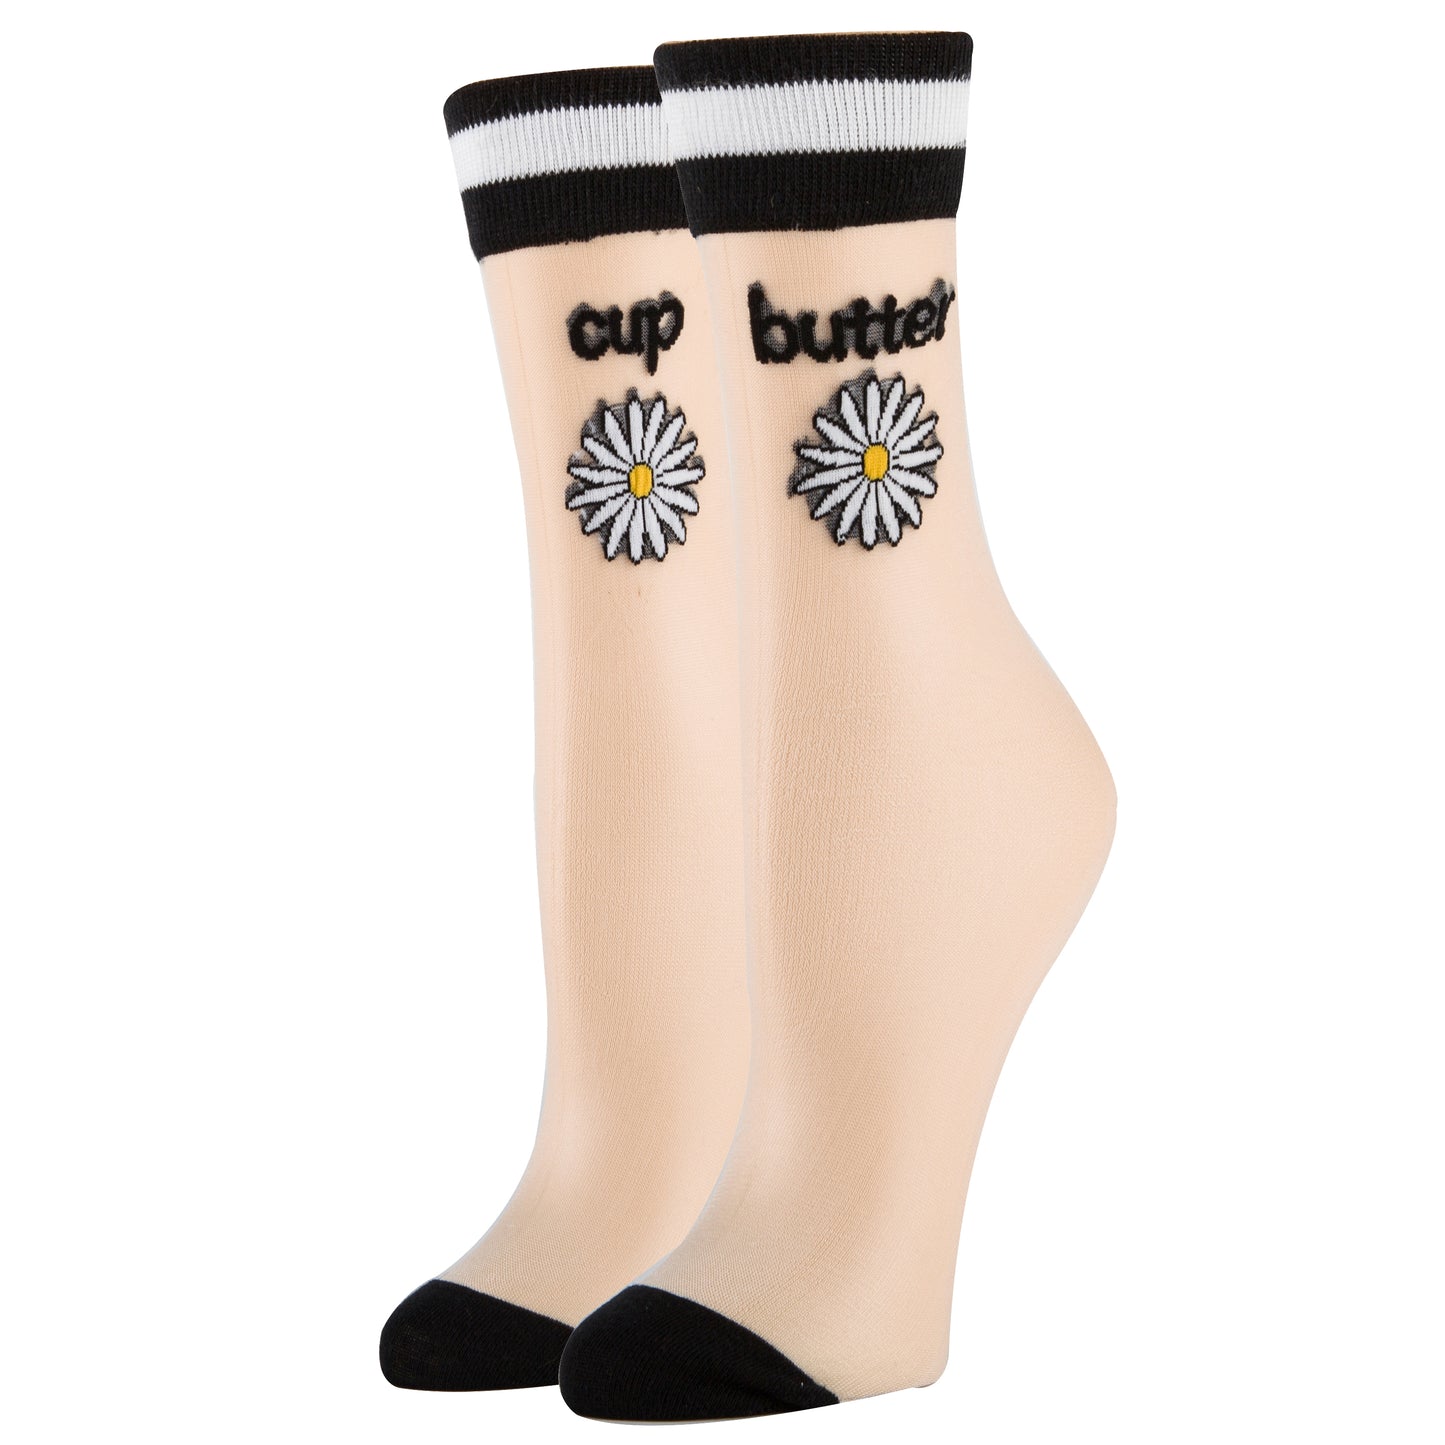 Butter Cup - Sock It Up Sock Co